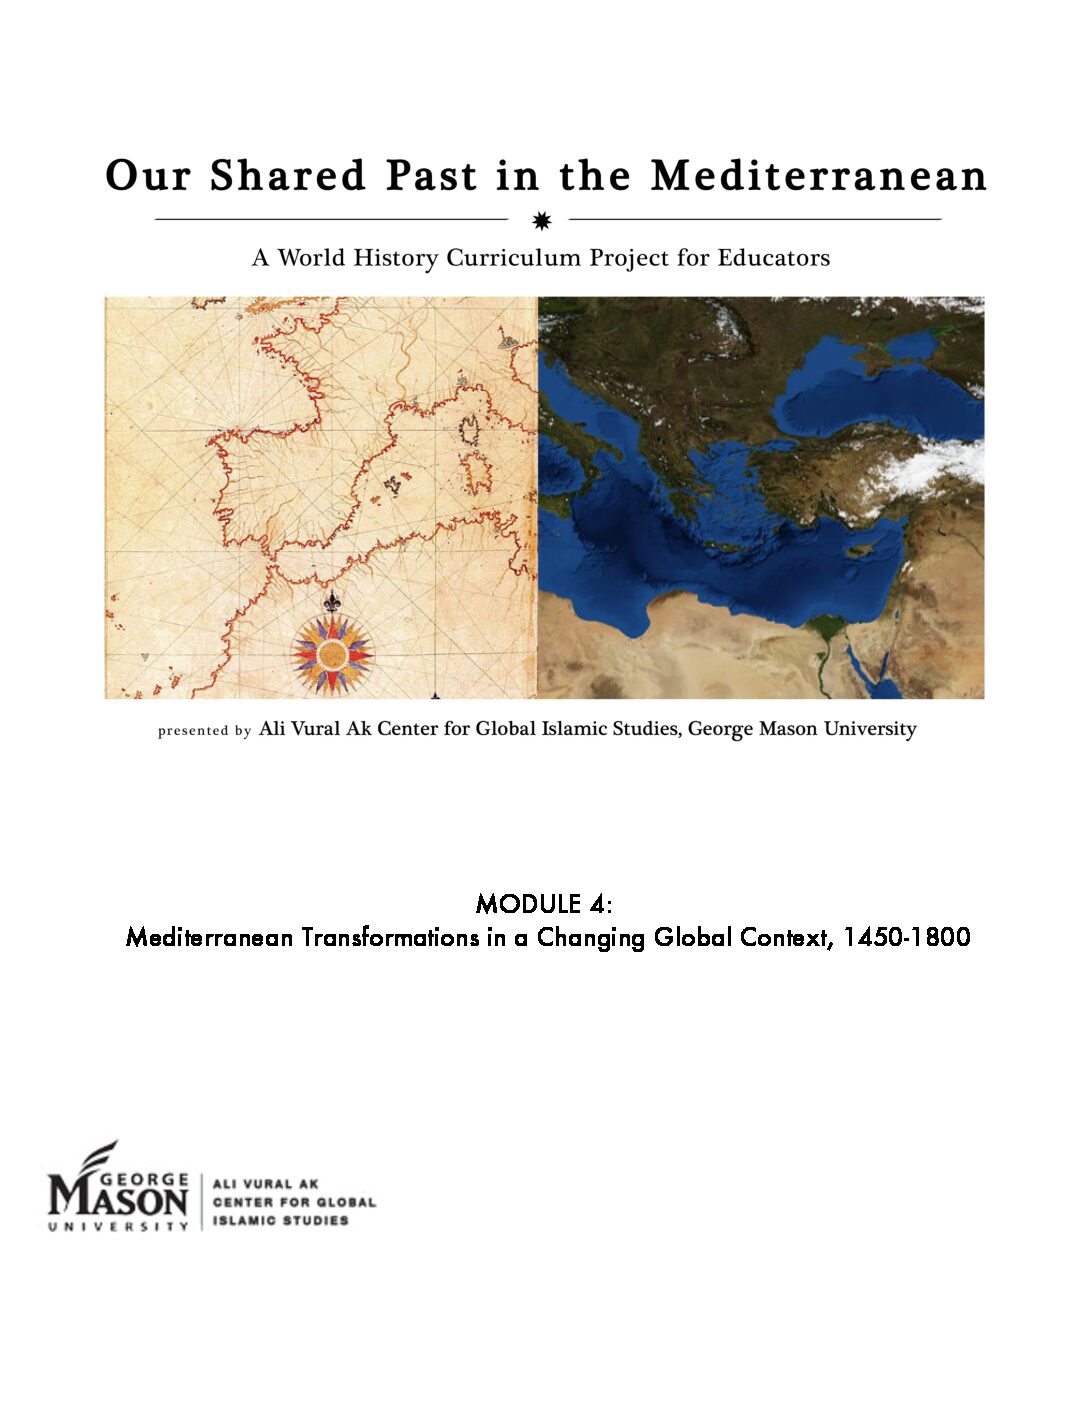 OSPM-Module-4-Mediterranean-Transformations-1450-1800-CE.pdf